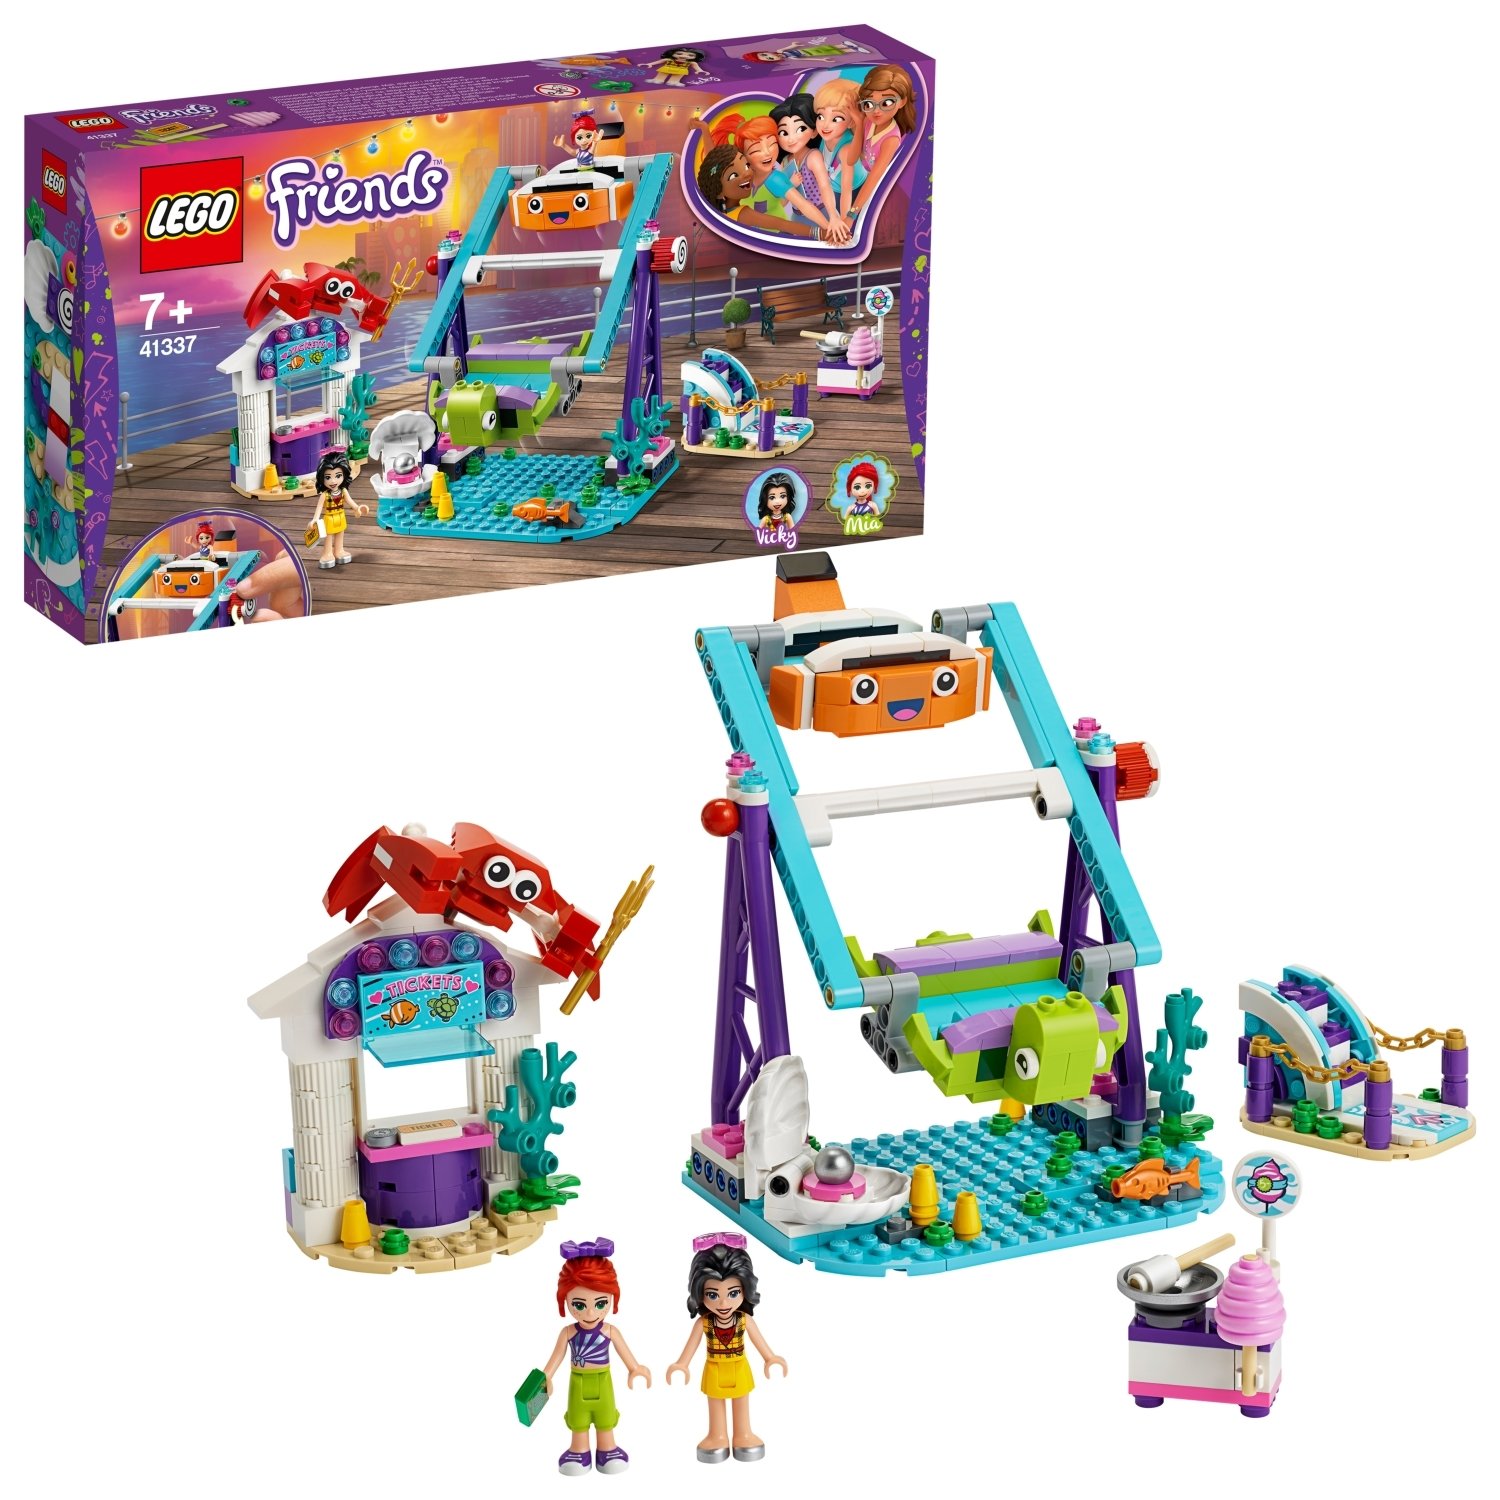 LEGO Underwater Loop Amusement Park Playset - 41337